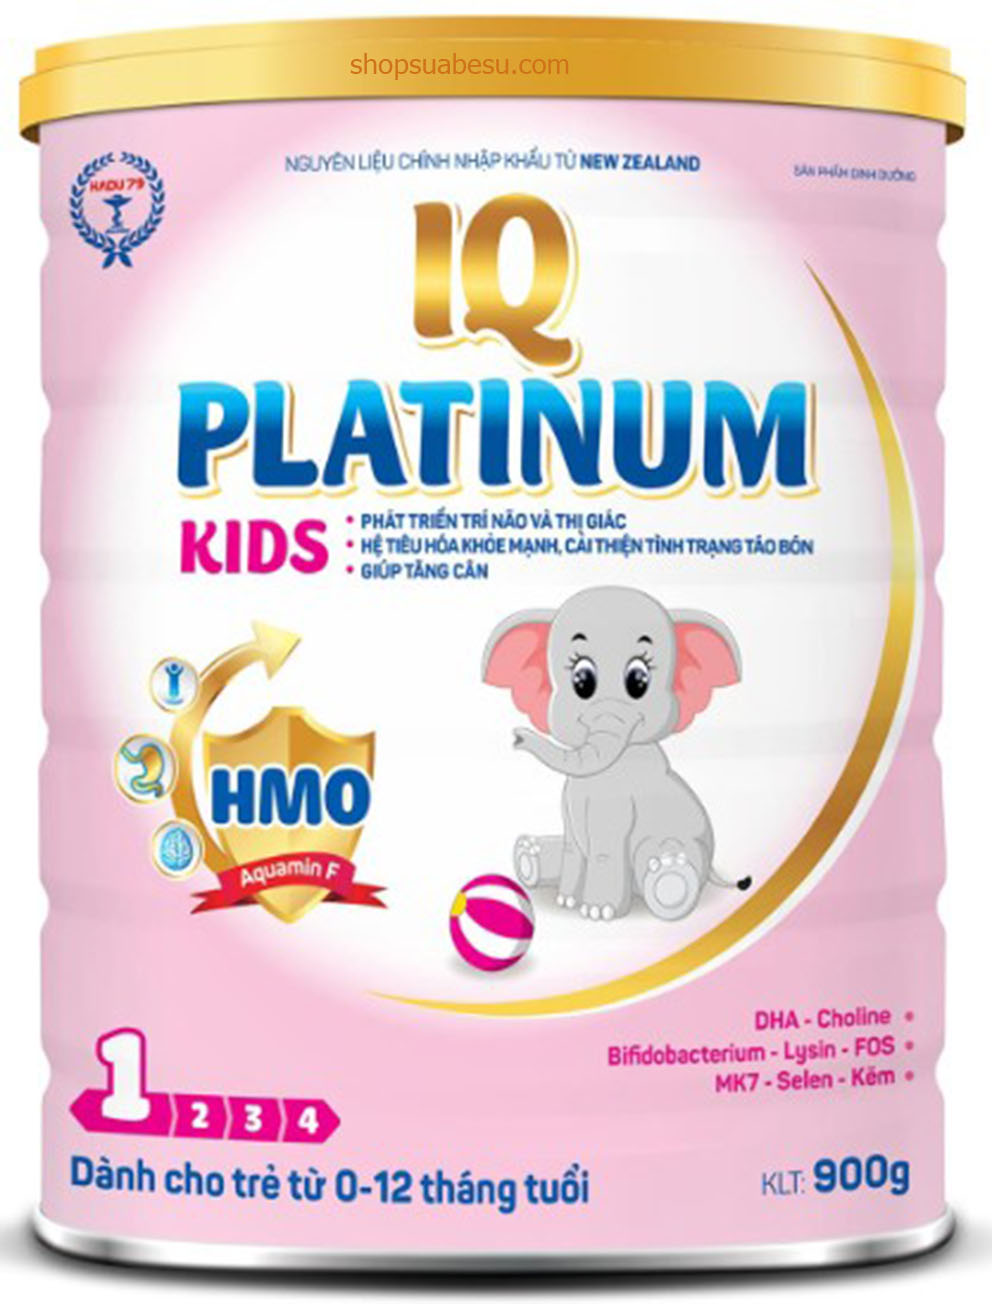 Sữa IQ PLATINUM KID 900g